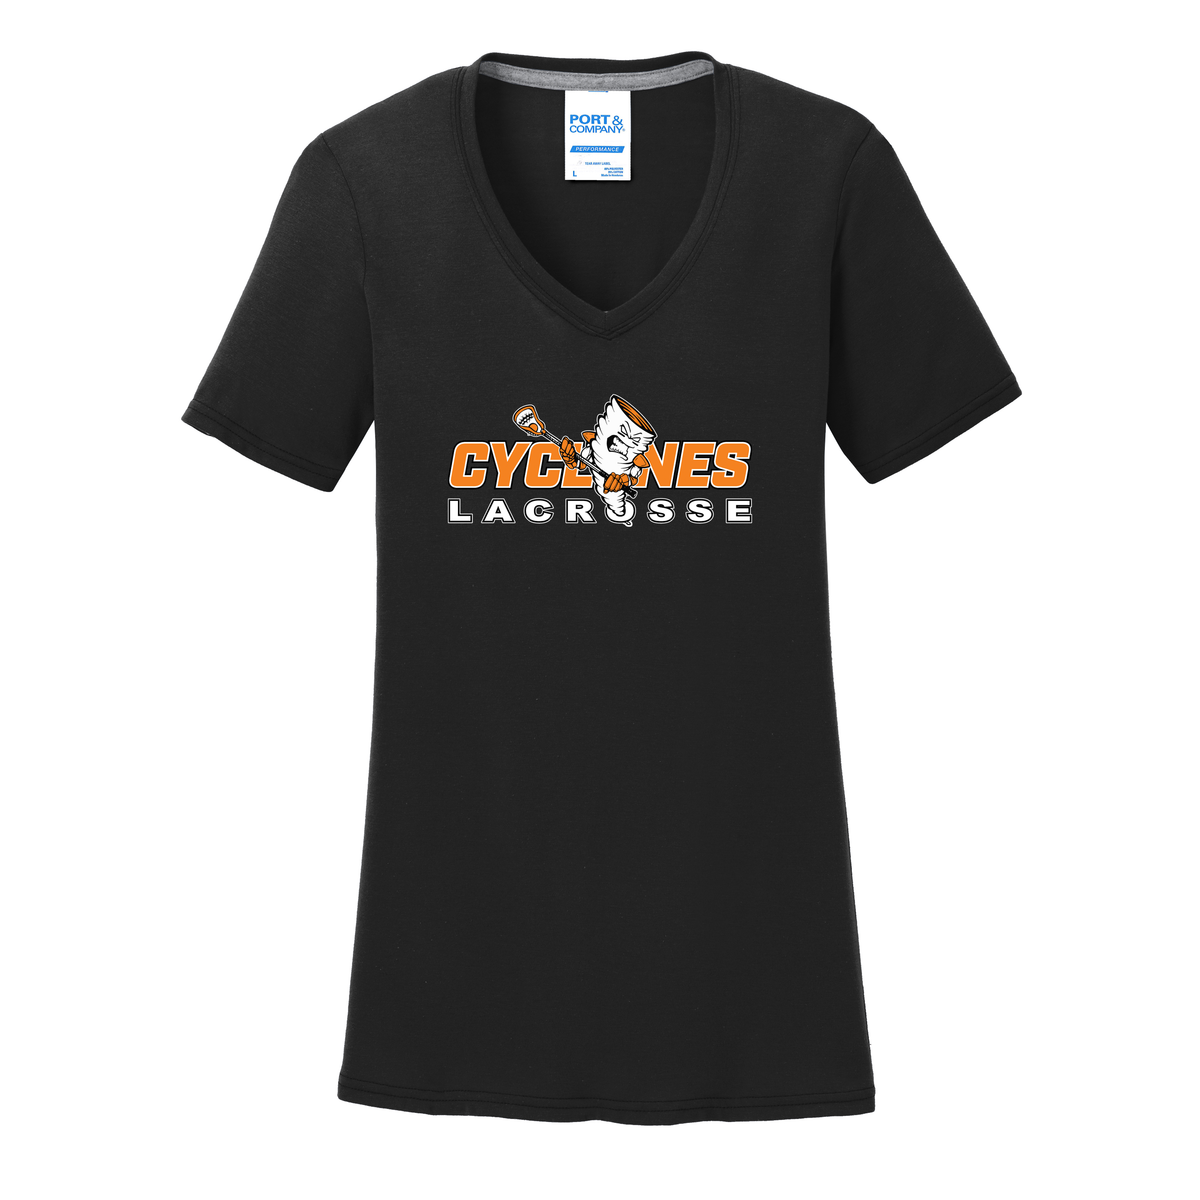 Cyclones Lacrosse Women's T-Shirt